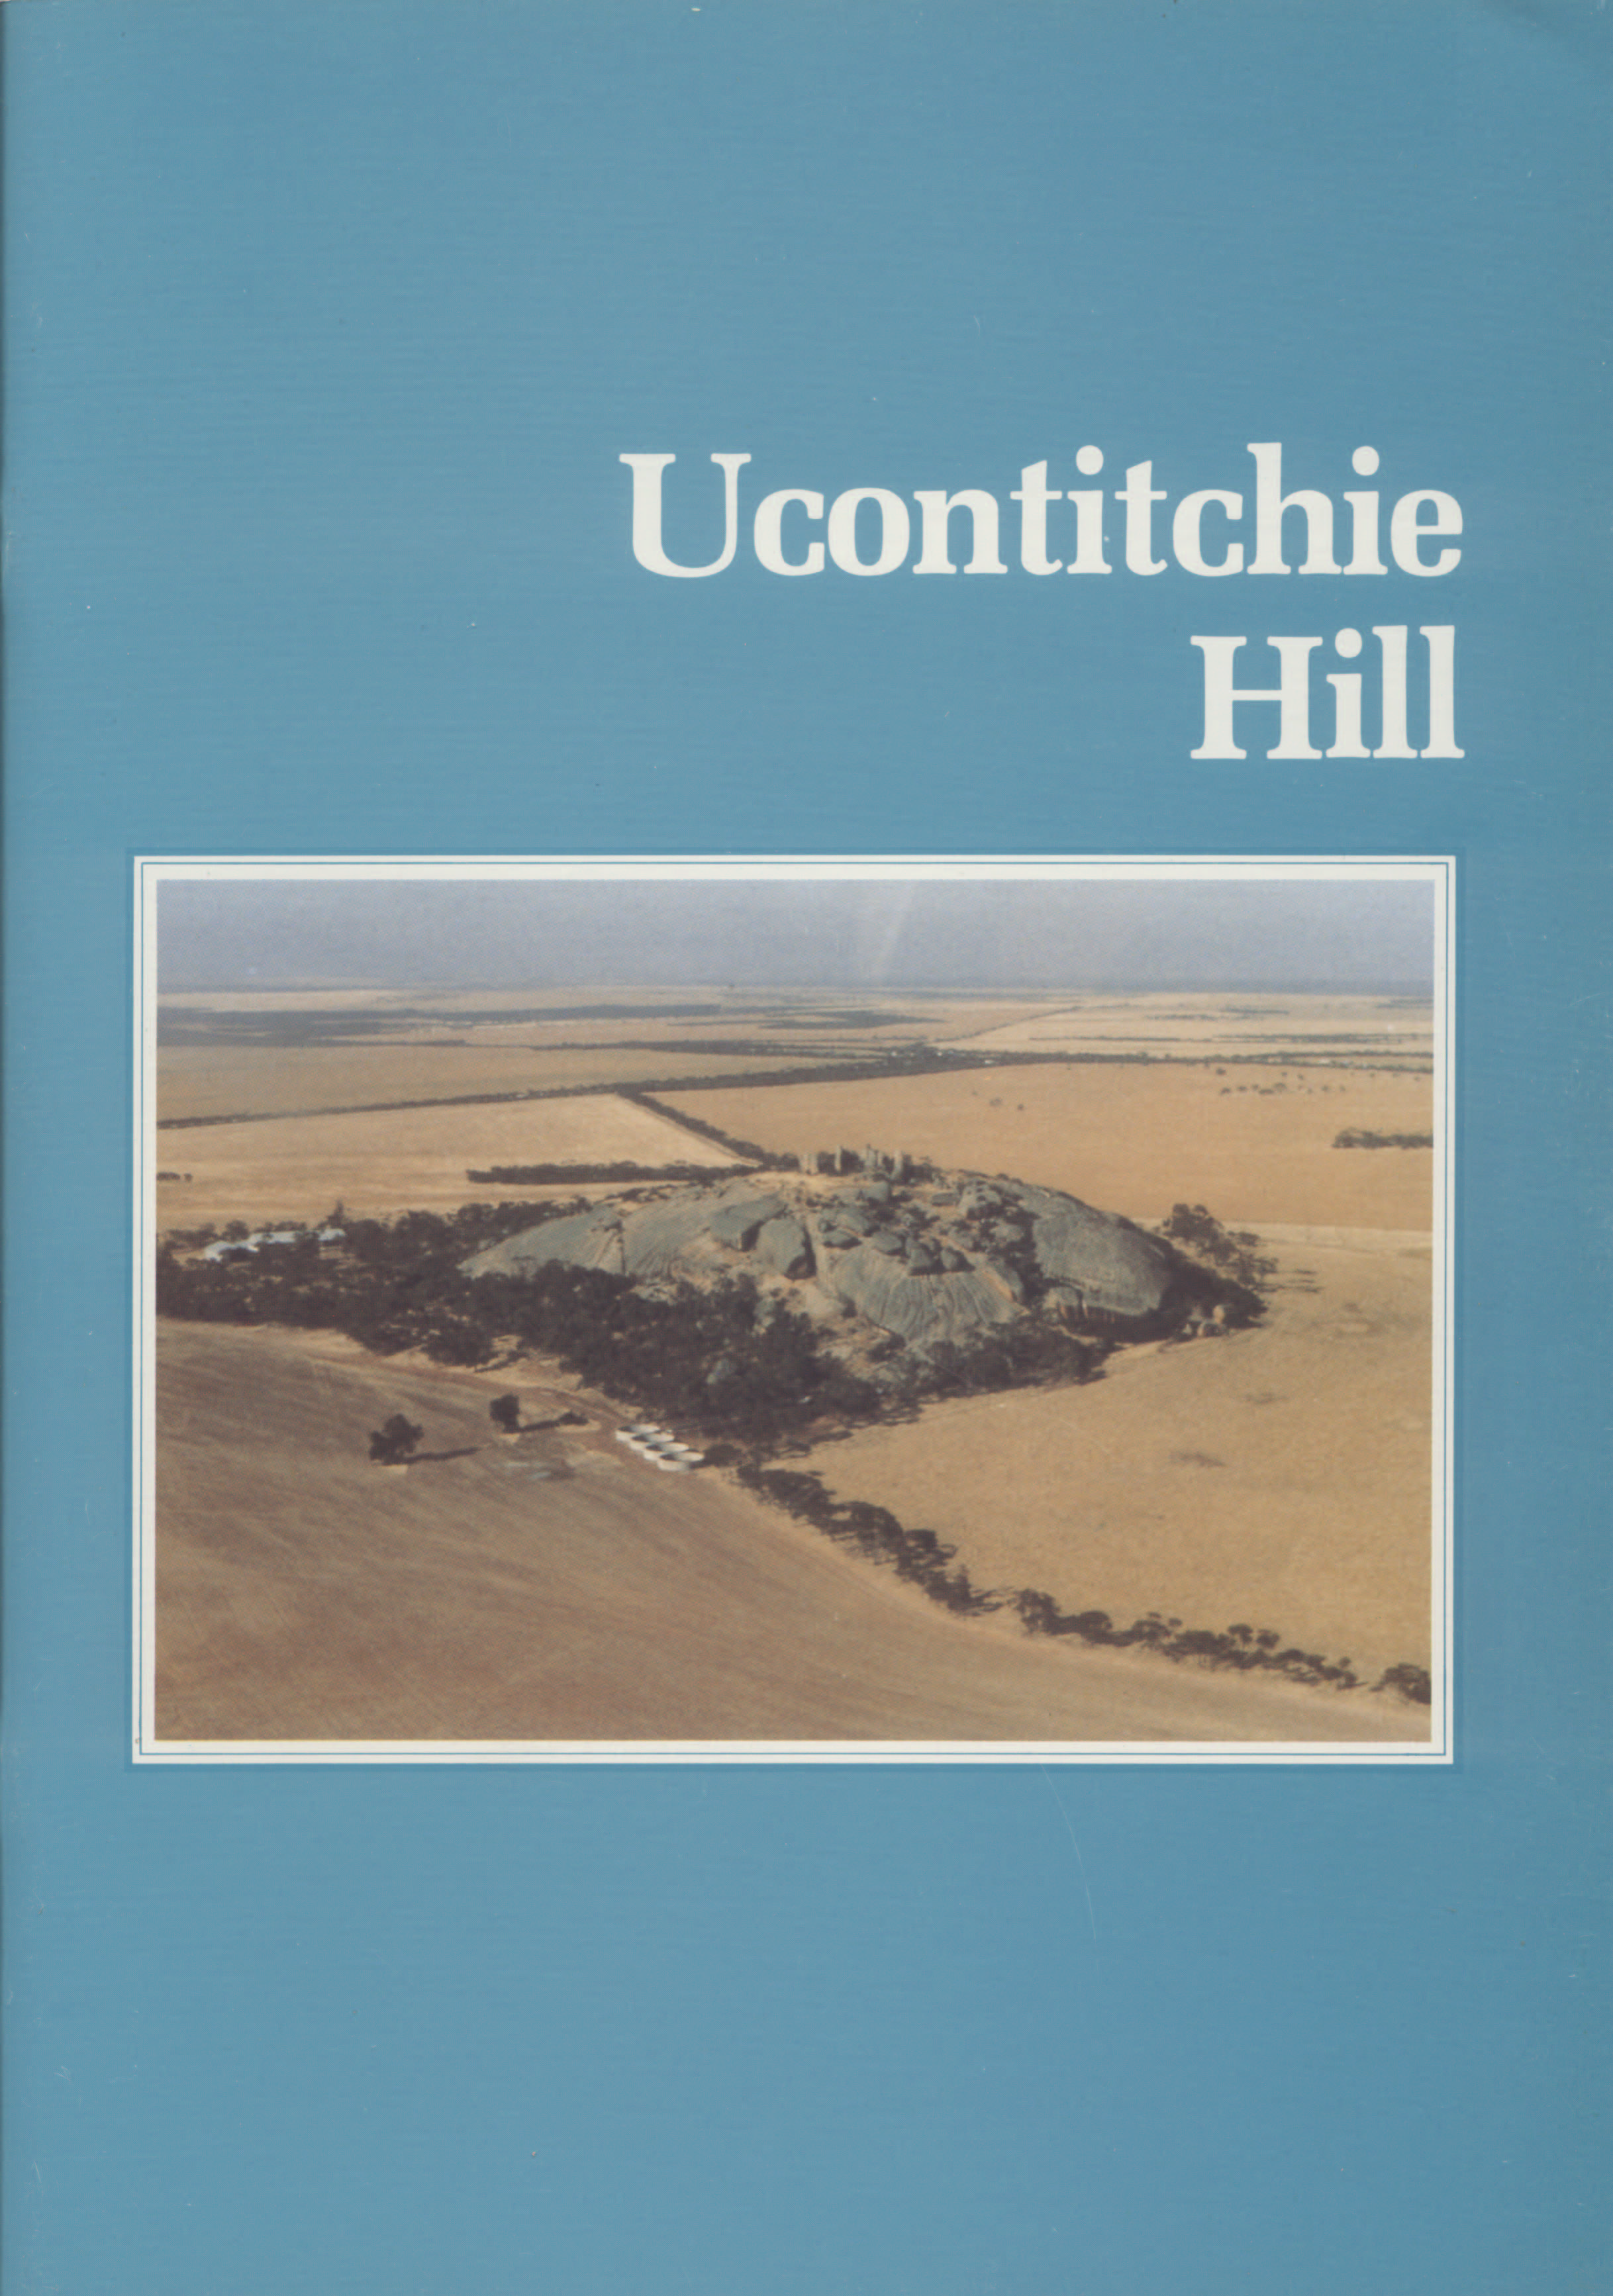 Ucontitchie Hill